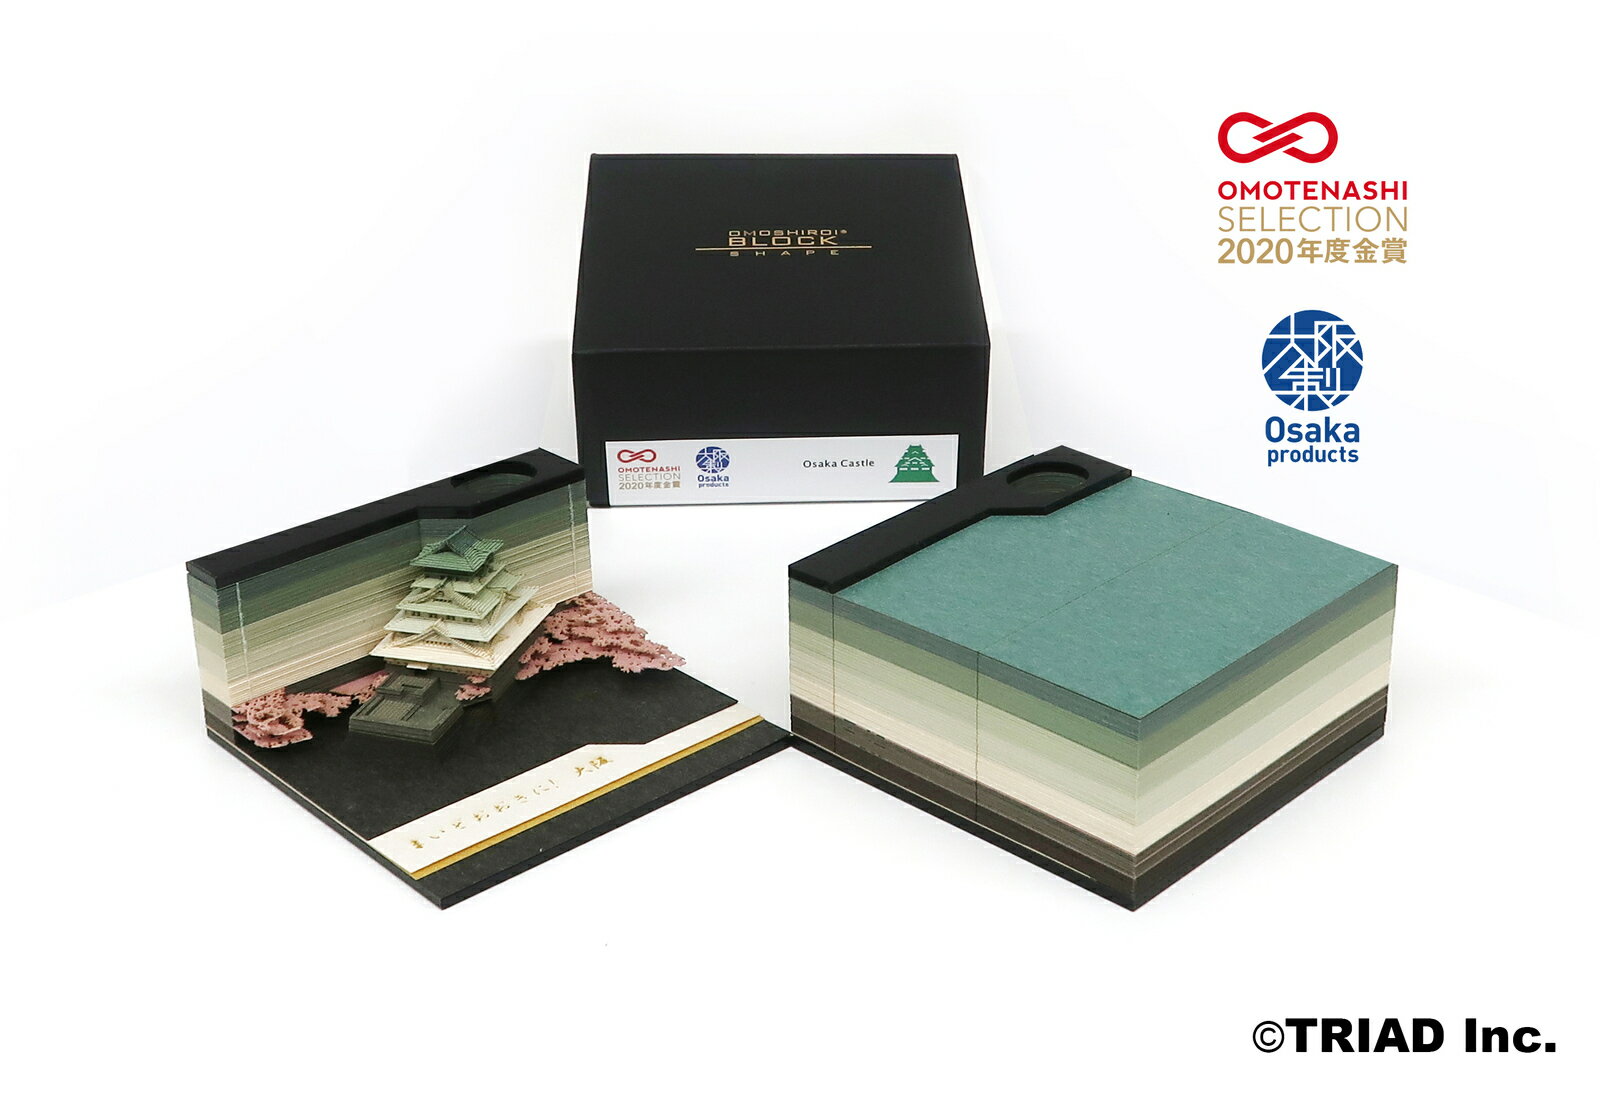 OsakaCastle 公式 OMOSHIROIBLOCK メモ帳 立体メモ ペン立て 収納ケース付き 飾り物 インテリア プレゼント